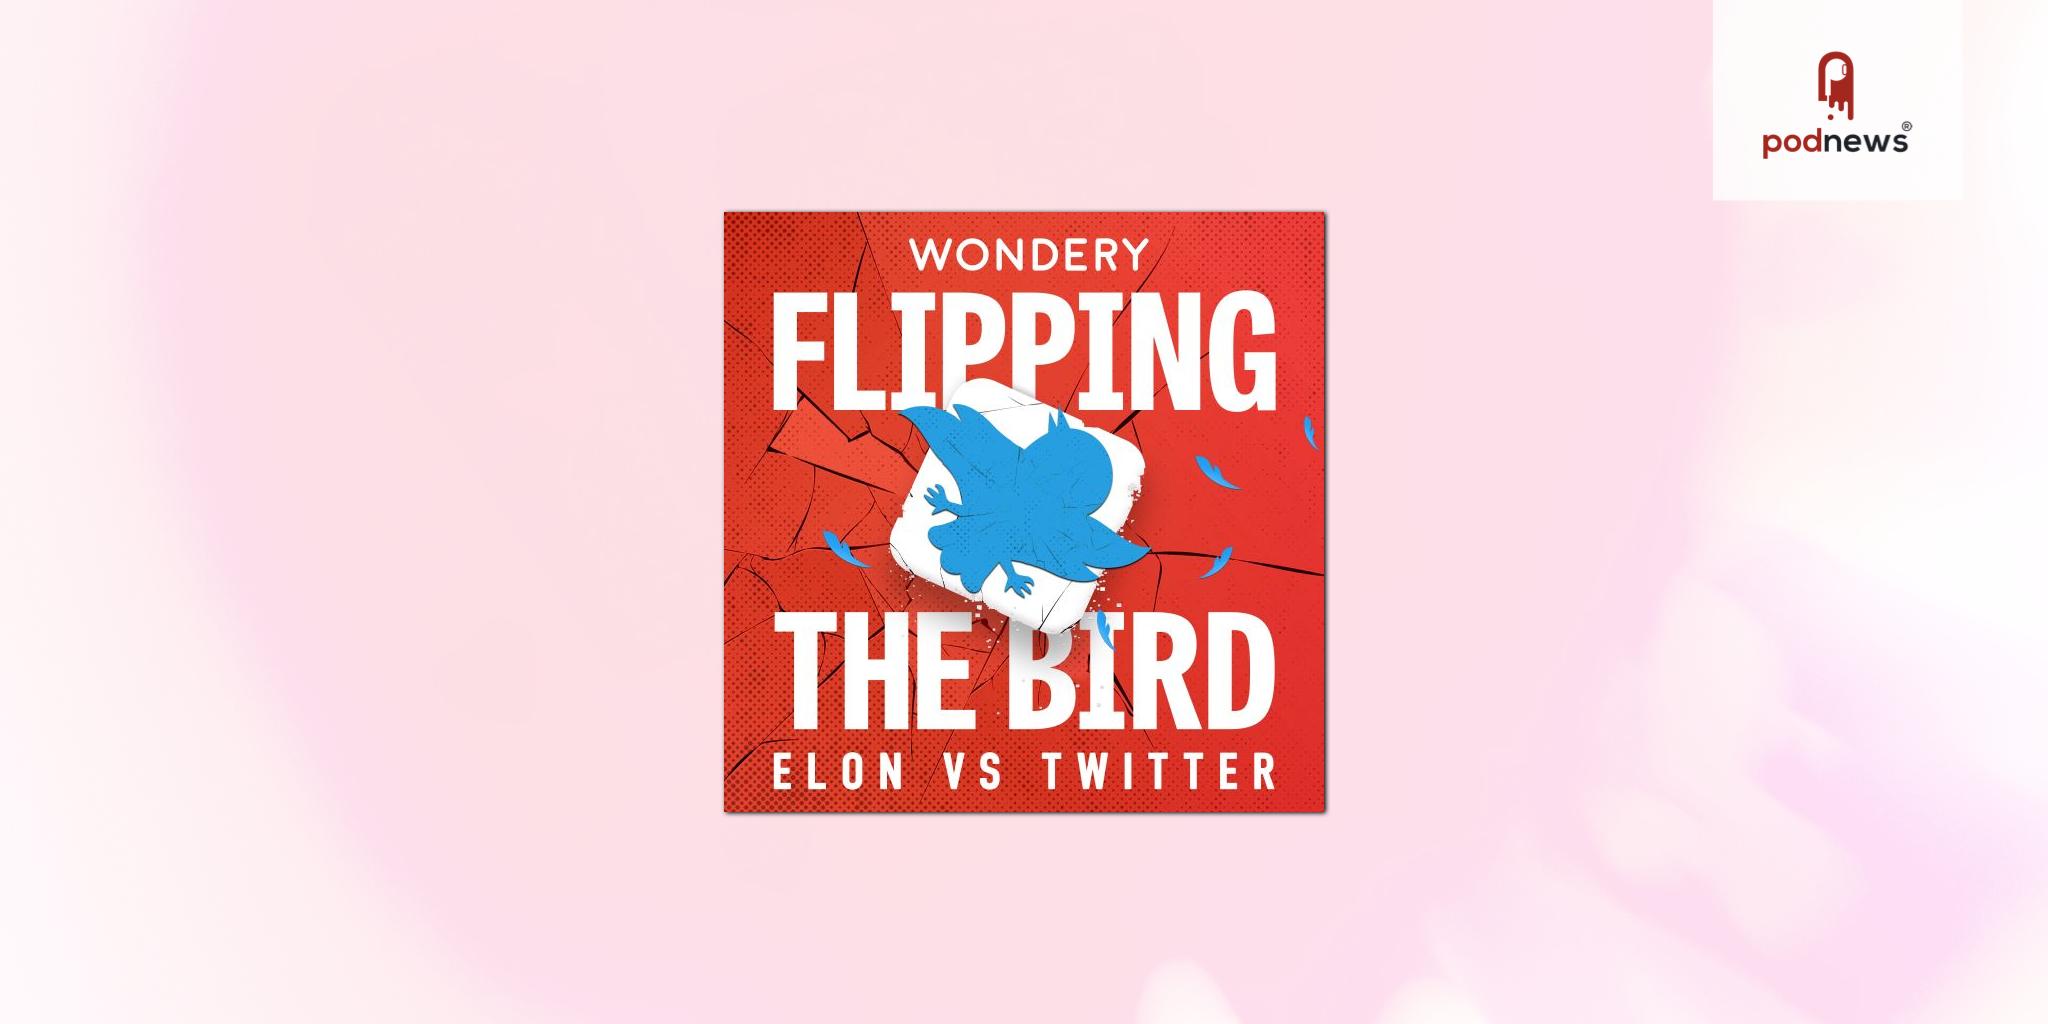 Wondery Announces Original Podcast Flipping The Bird: Elon vs. Twitter, Detailing Elon Musk’s Twitter Takeover